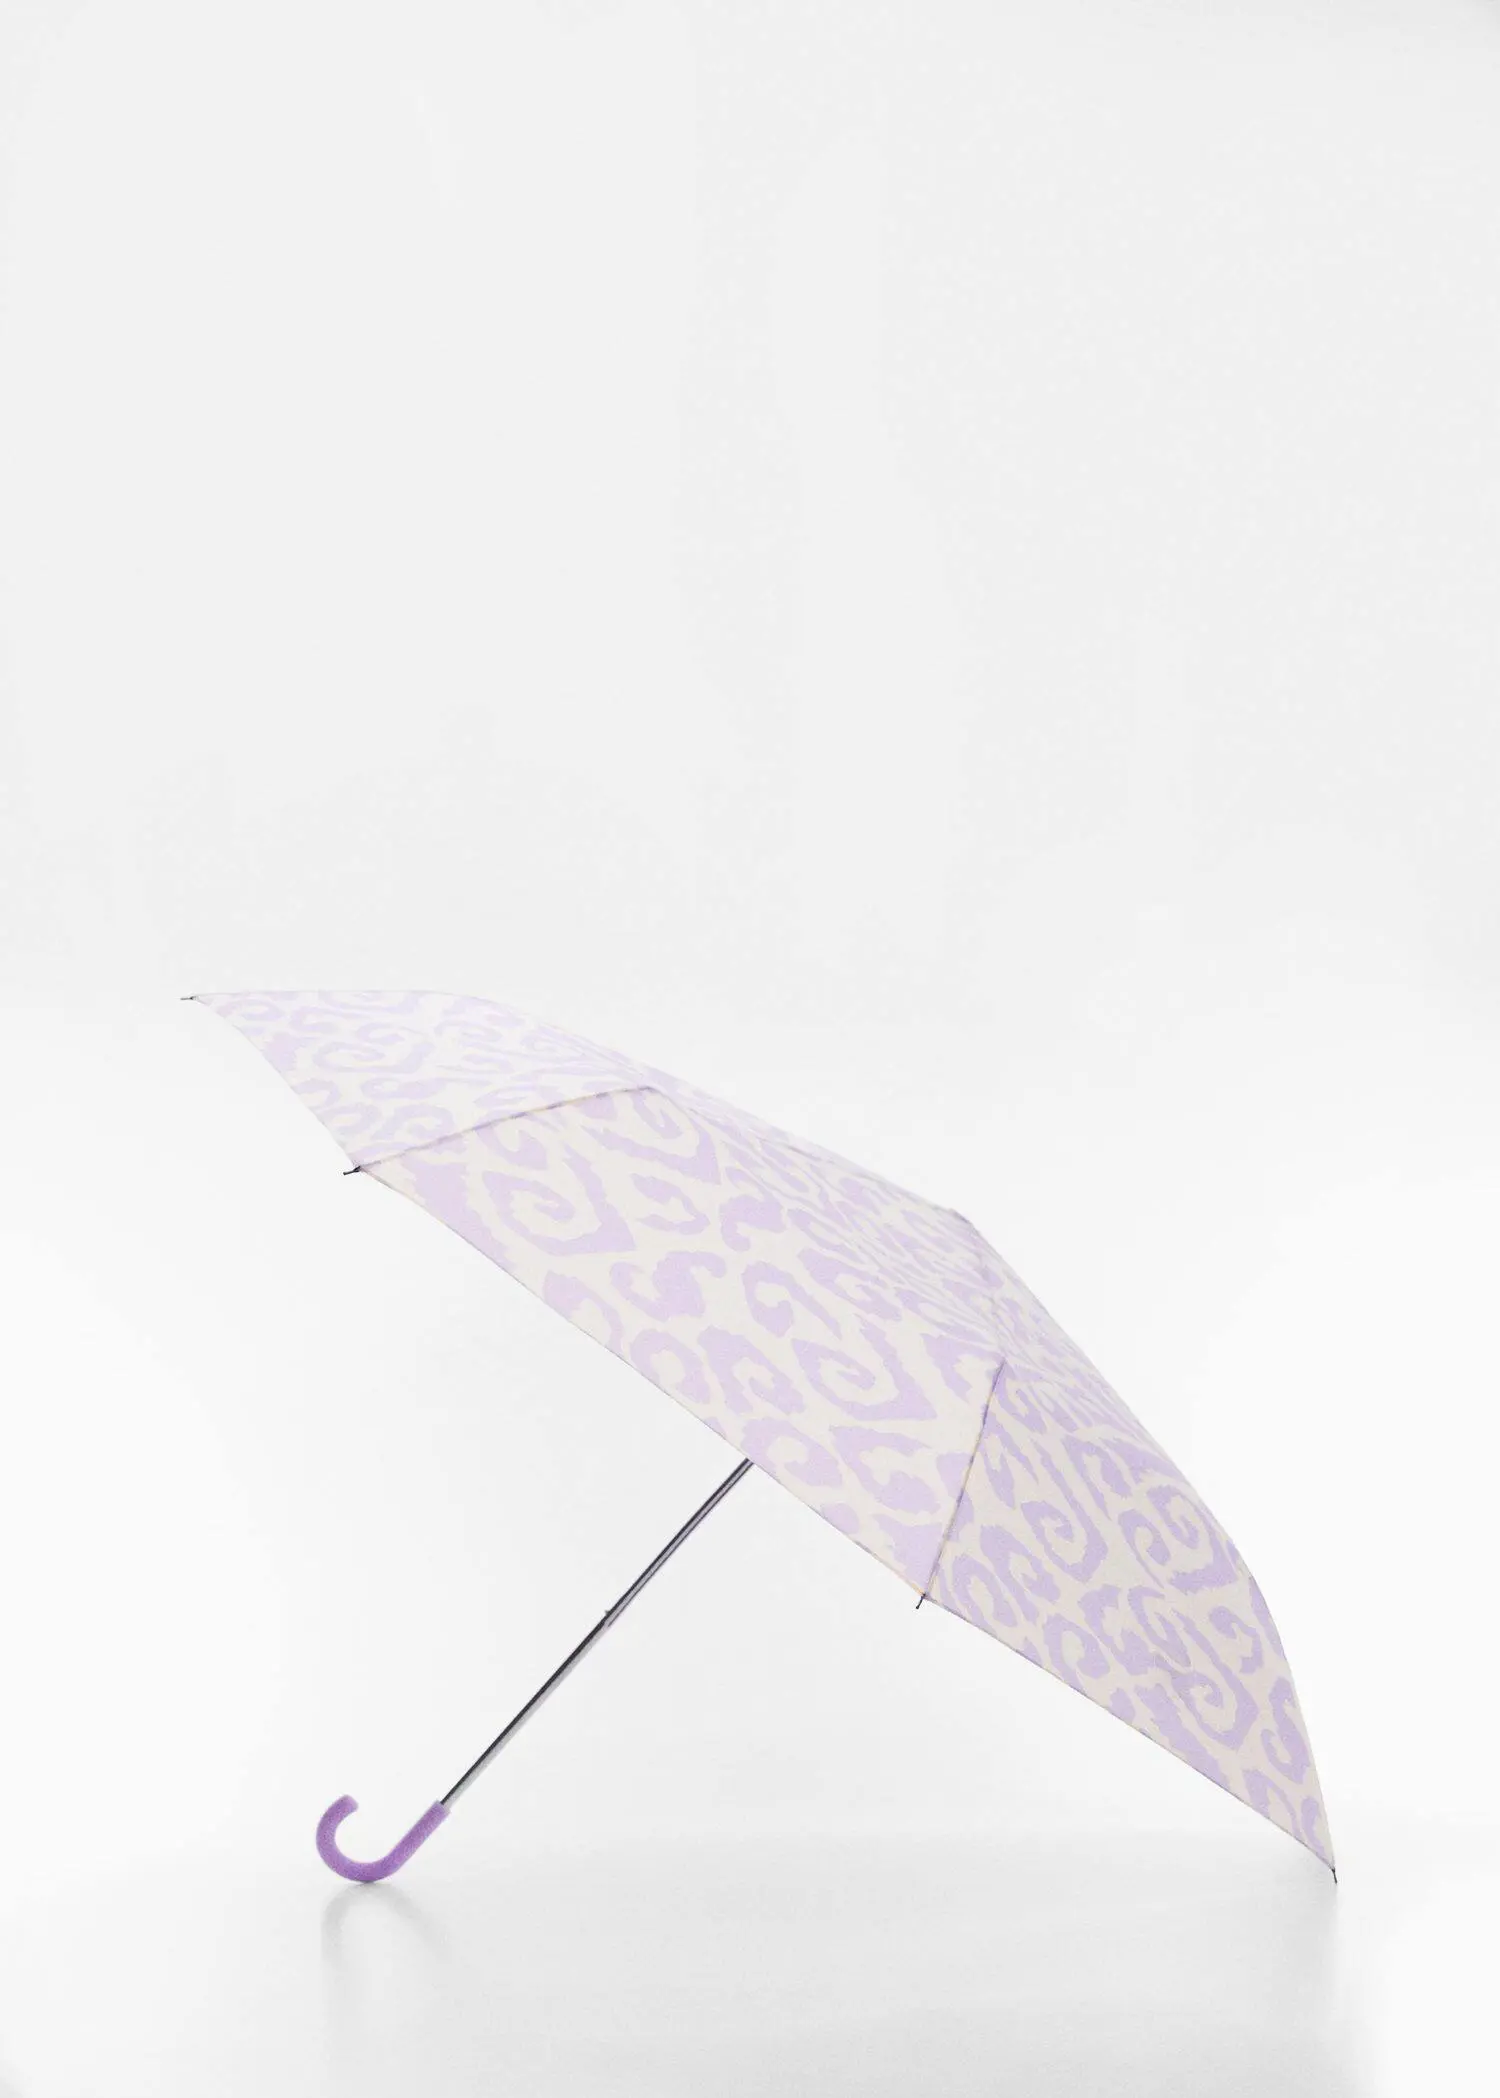 Mango Print folding umbrella. an open umbrella with a pattern on it. 